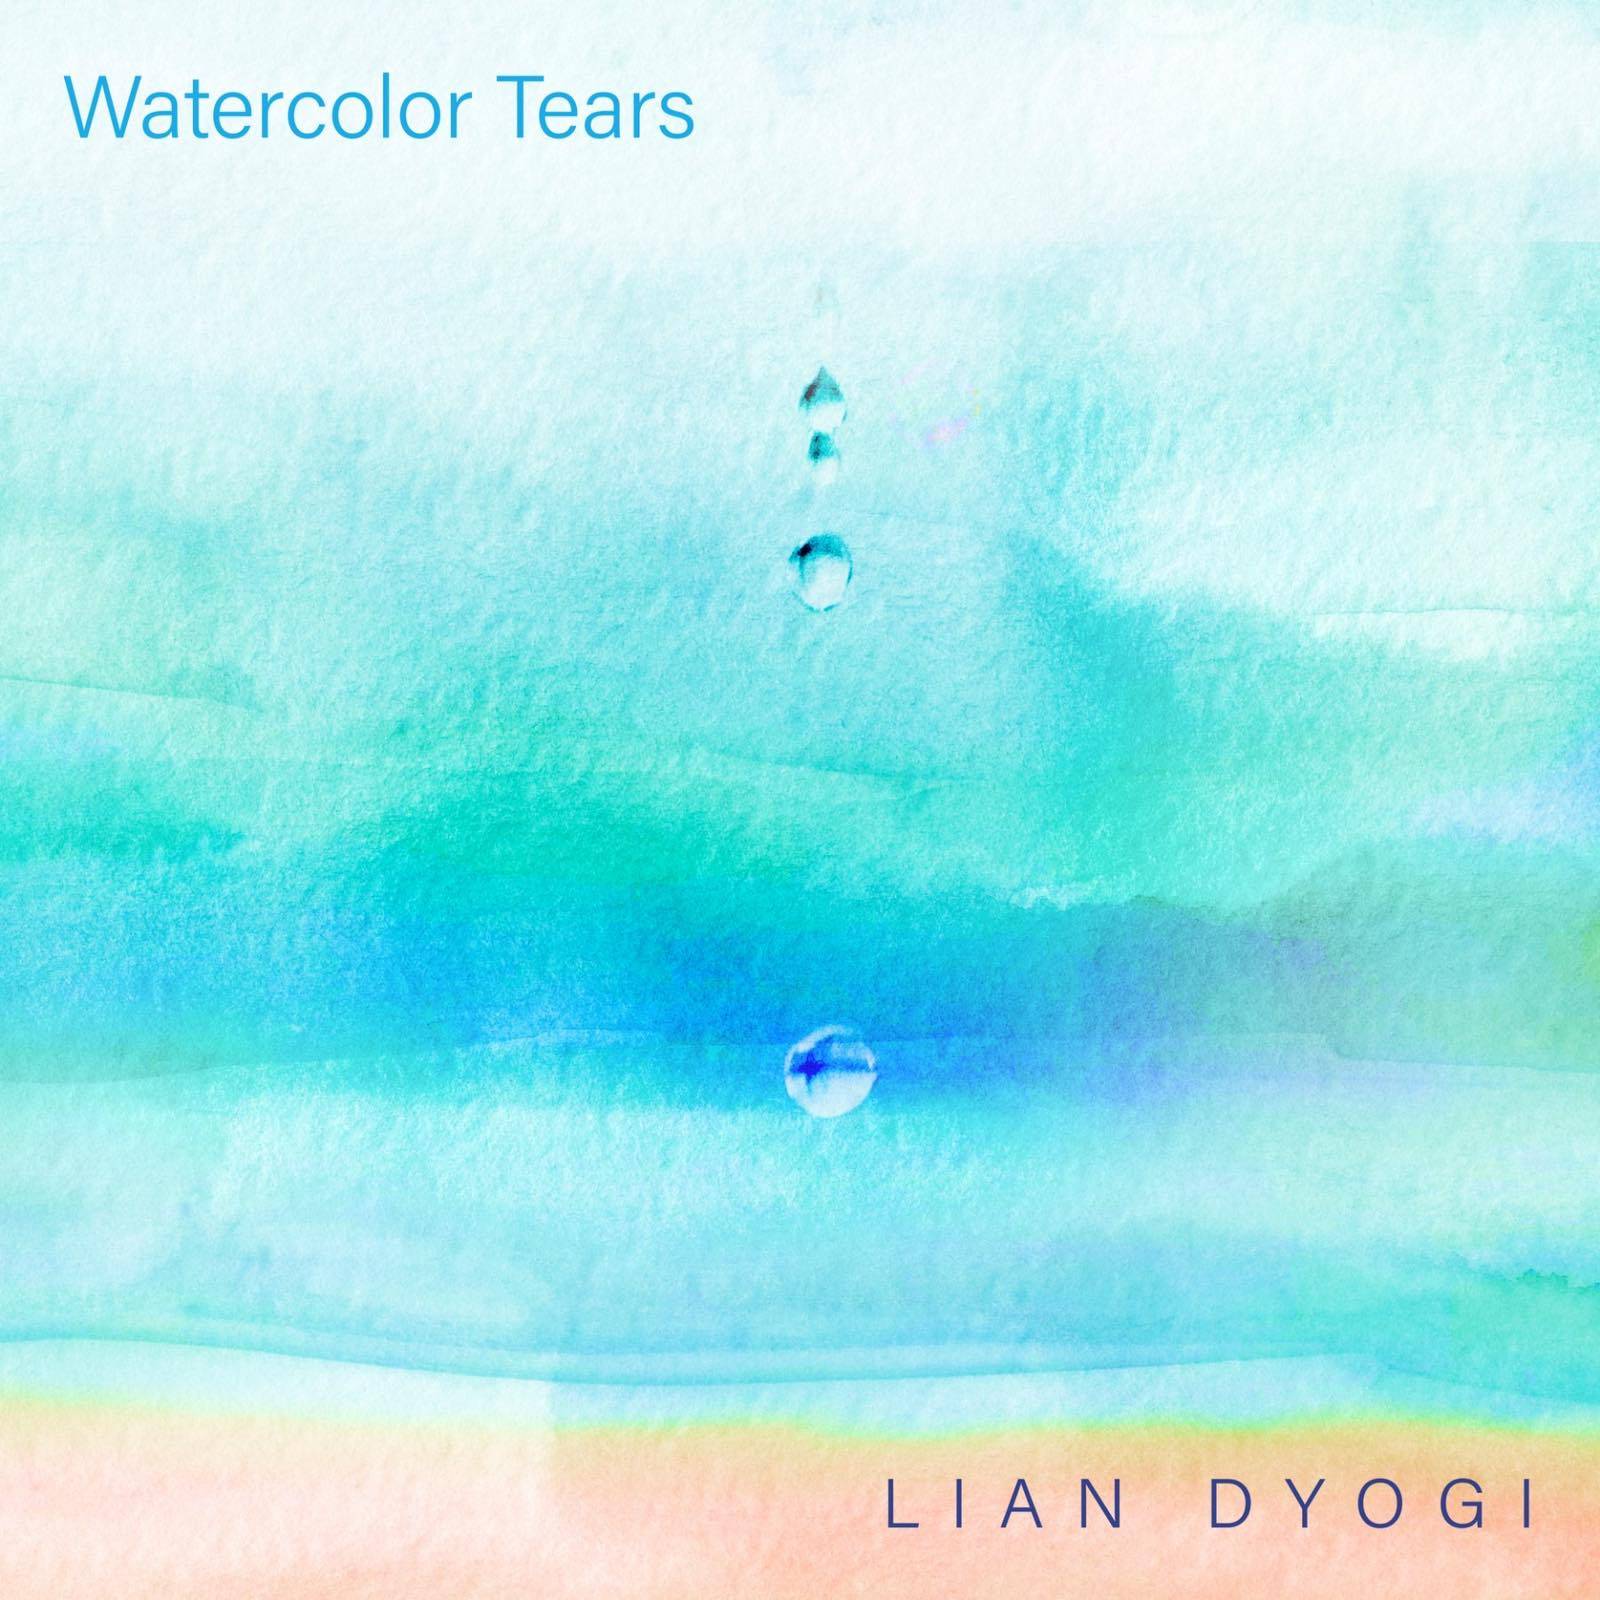 Watercolor Tears by Lian Dyogi